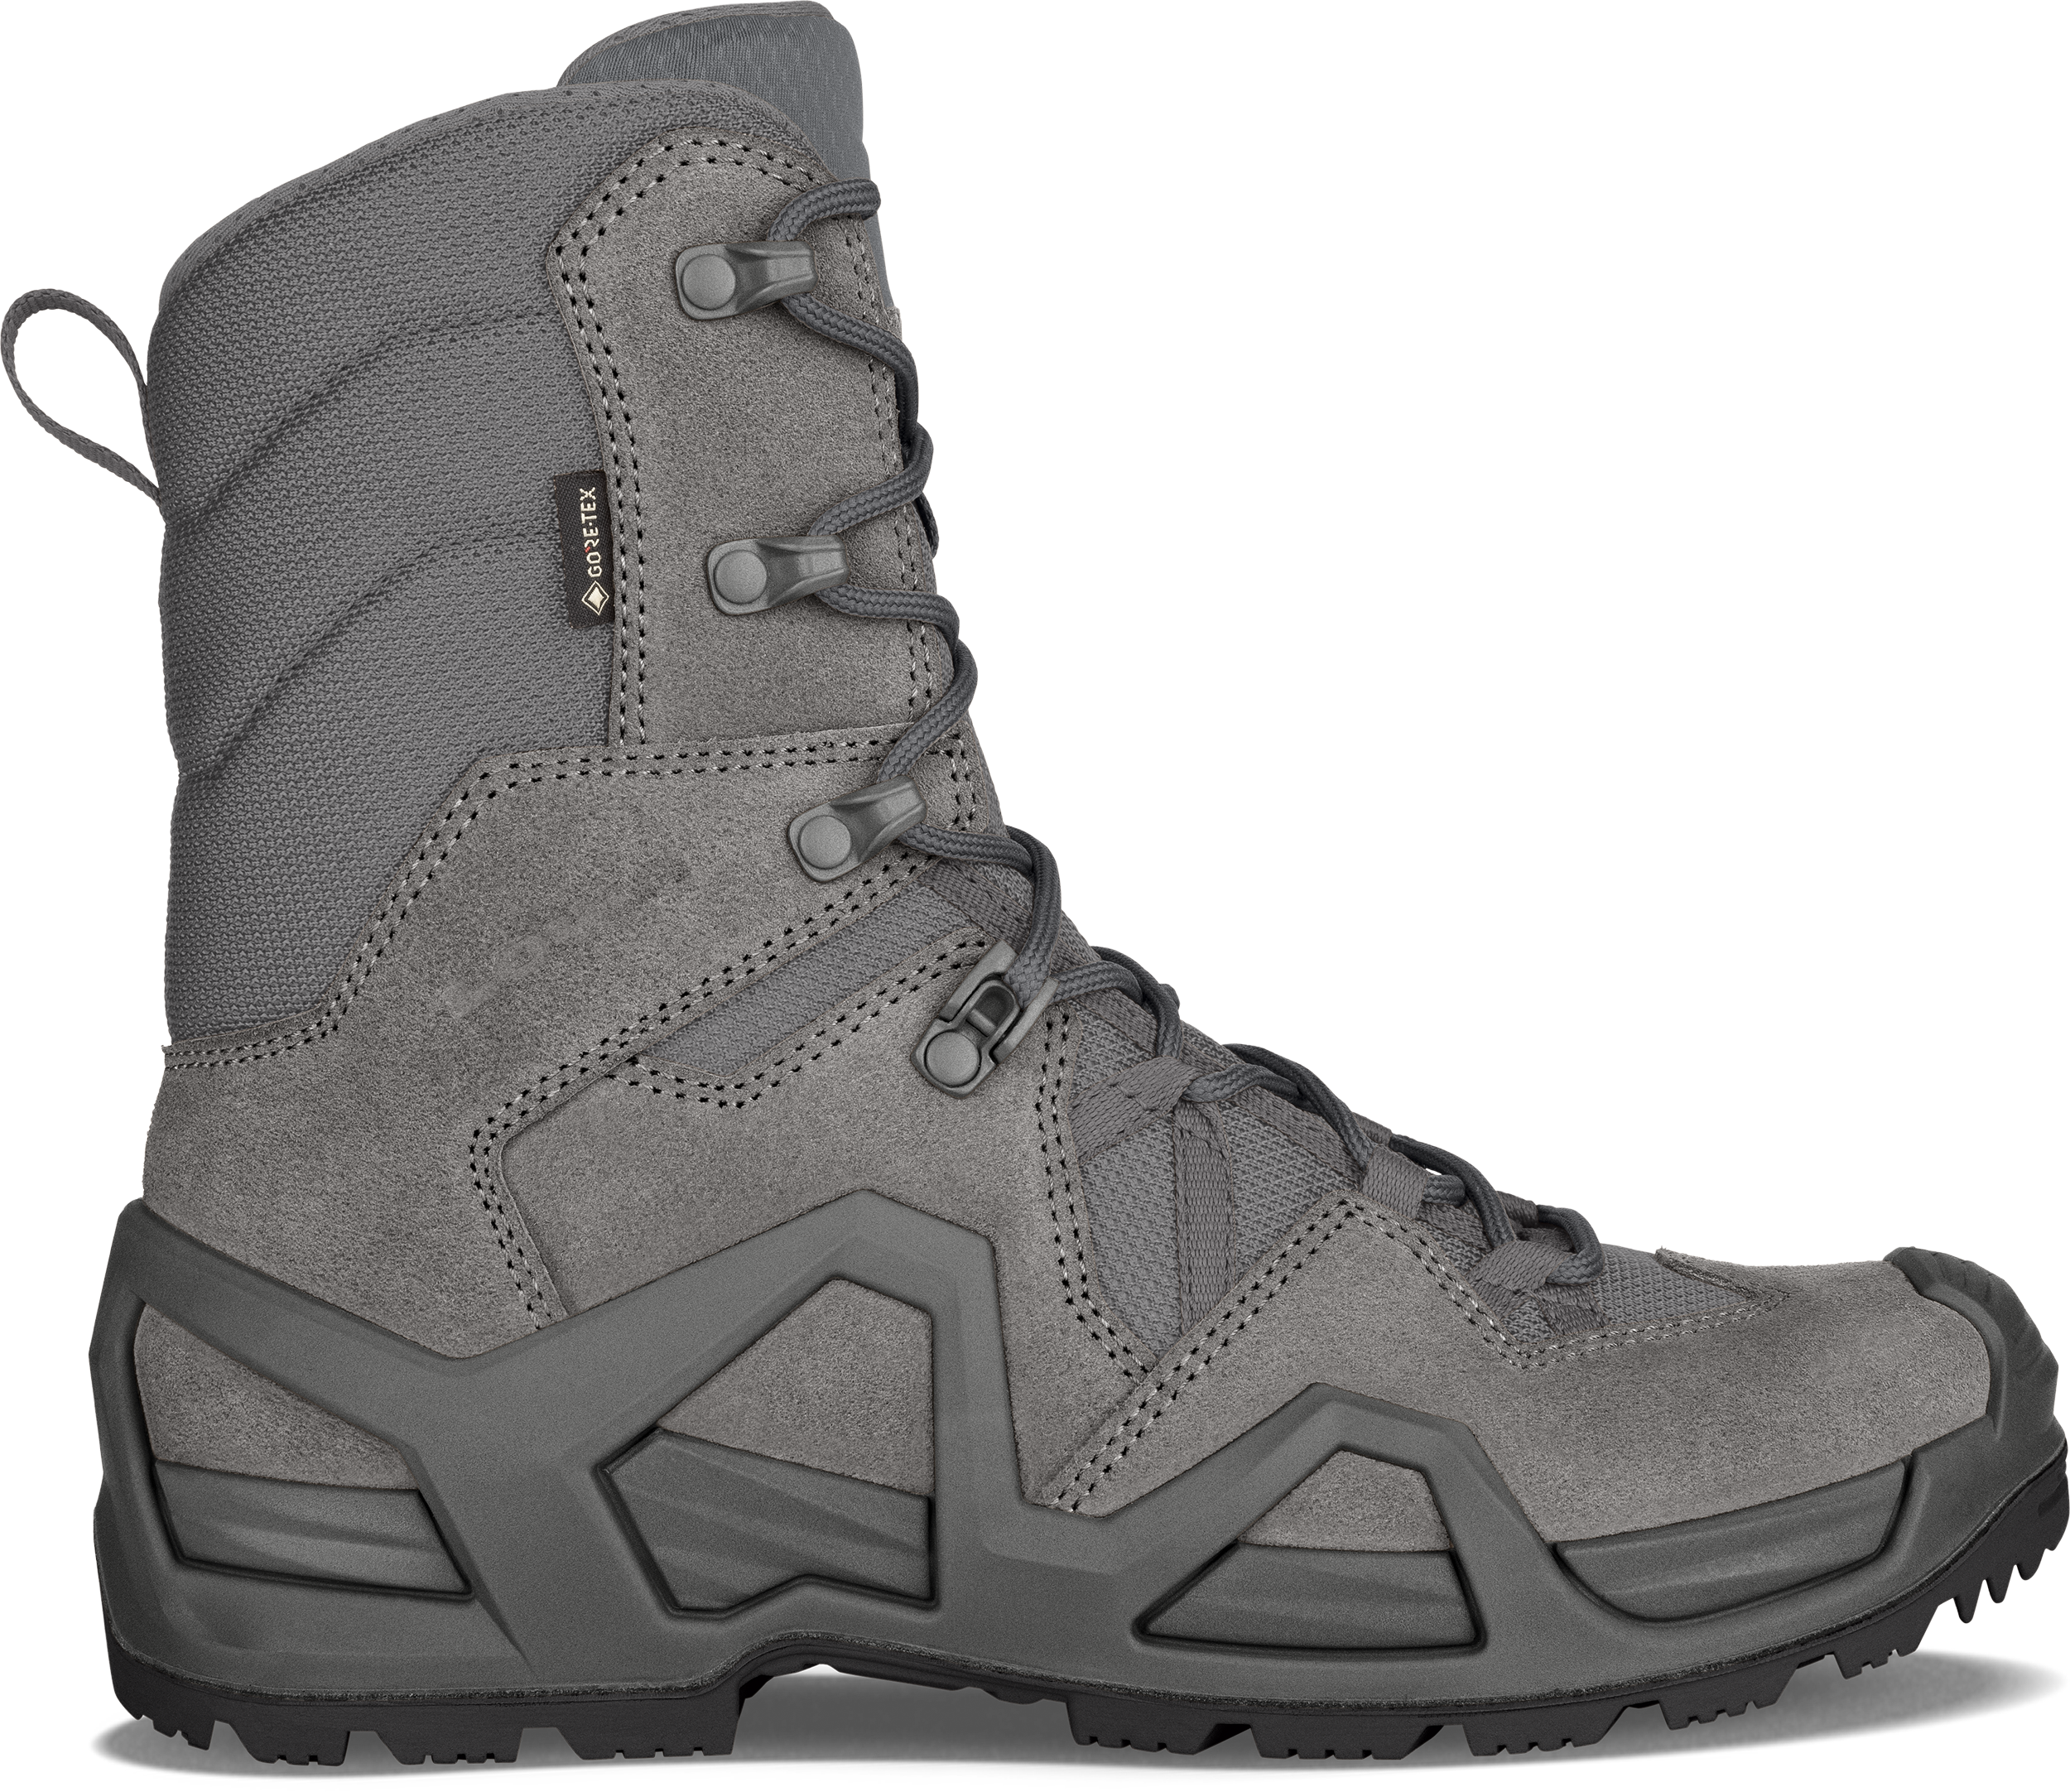 ZEPHYR MK2 GTX HI Ws: TASK FORCE: CLOSE-QUARTERS COMBAT Shoes for 